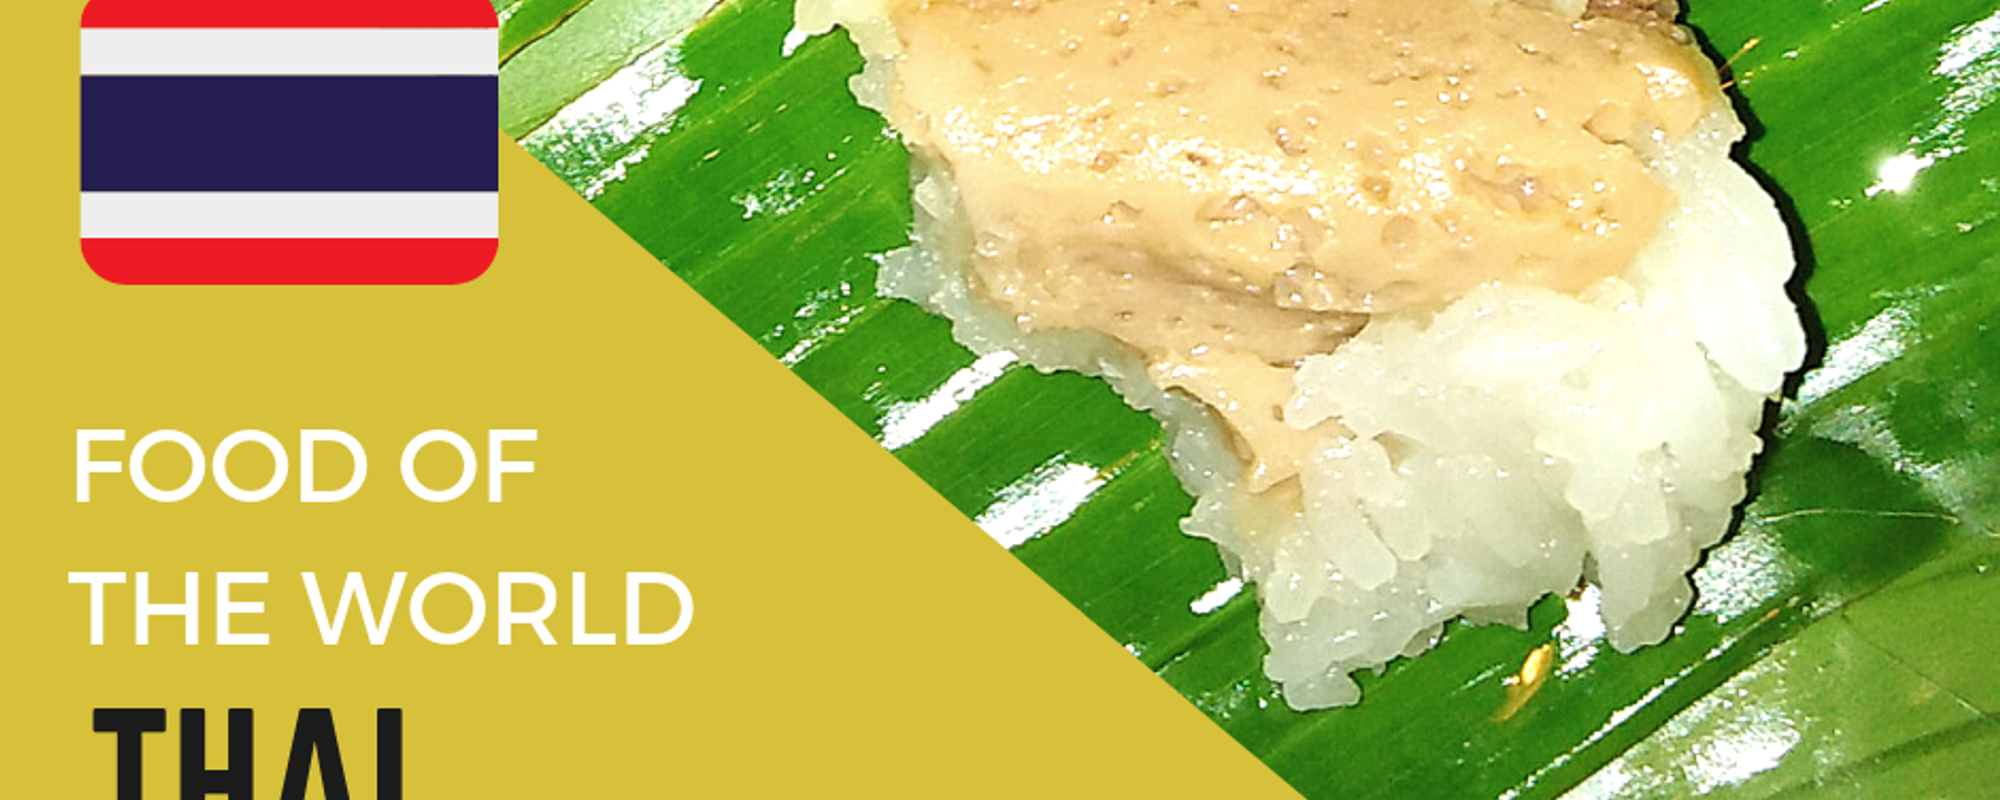 #Foodof theworld _Thai desserts: Khao Neow Sang Kaya ข้าวเหนียวสังขยา (Sticky Rice with Custard) and Colored Mango Sticky Rice